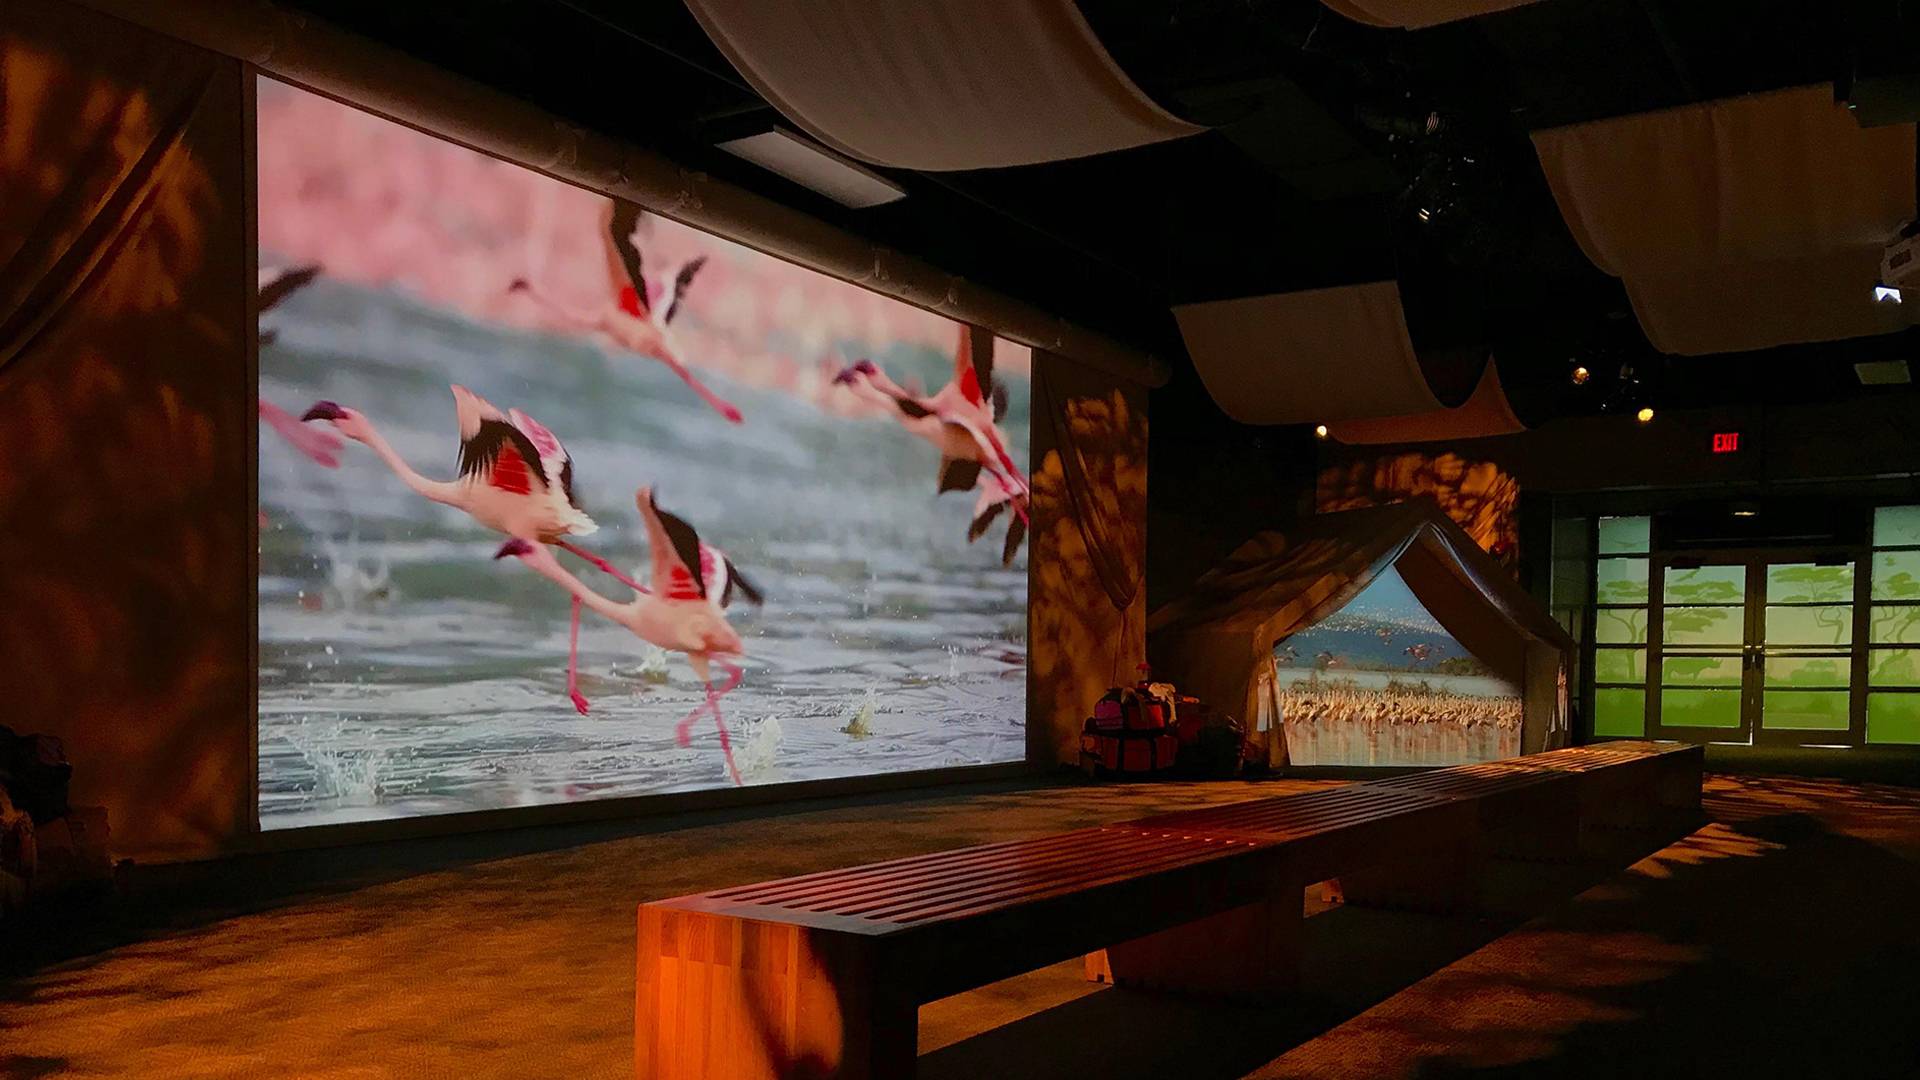 Exhibit screen shows flamingos flying over water